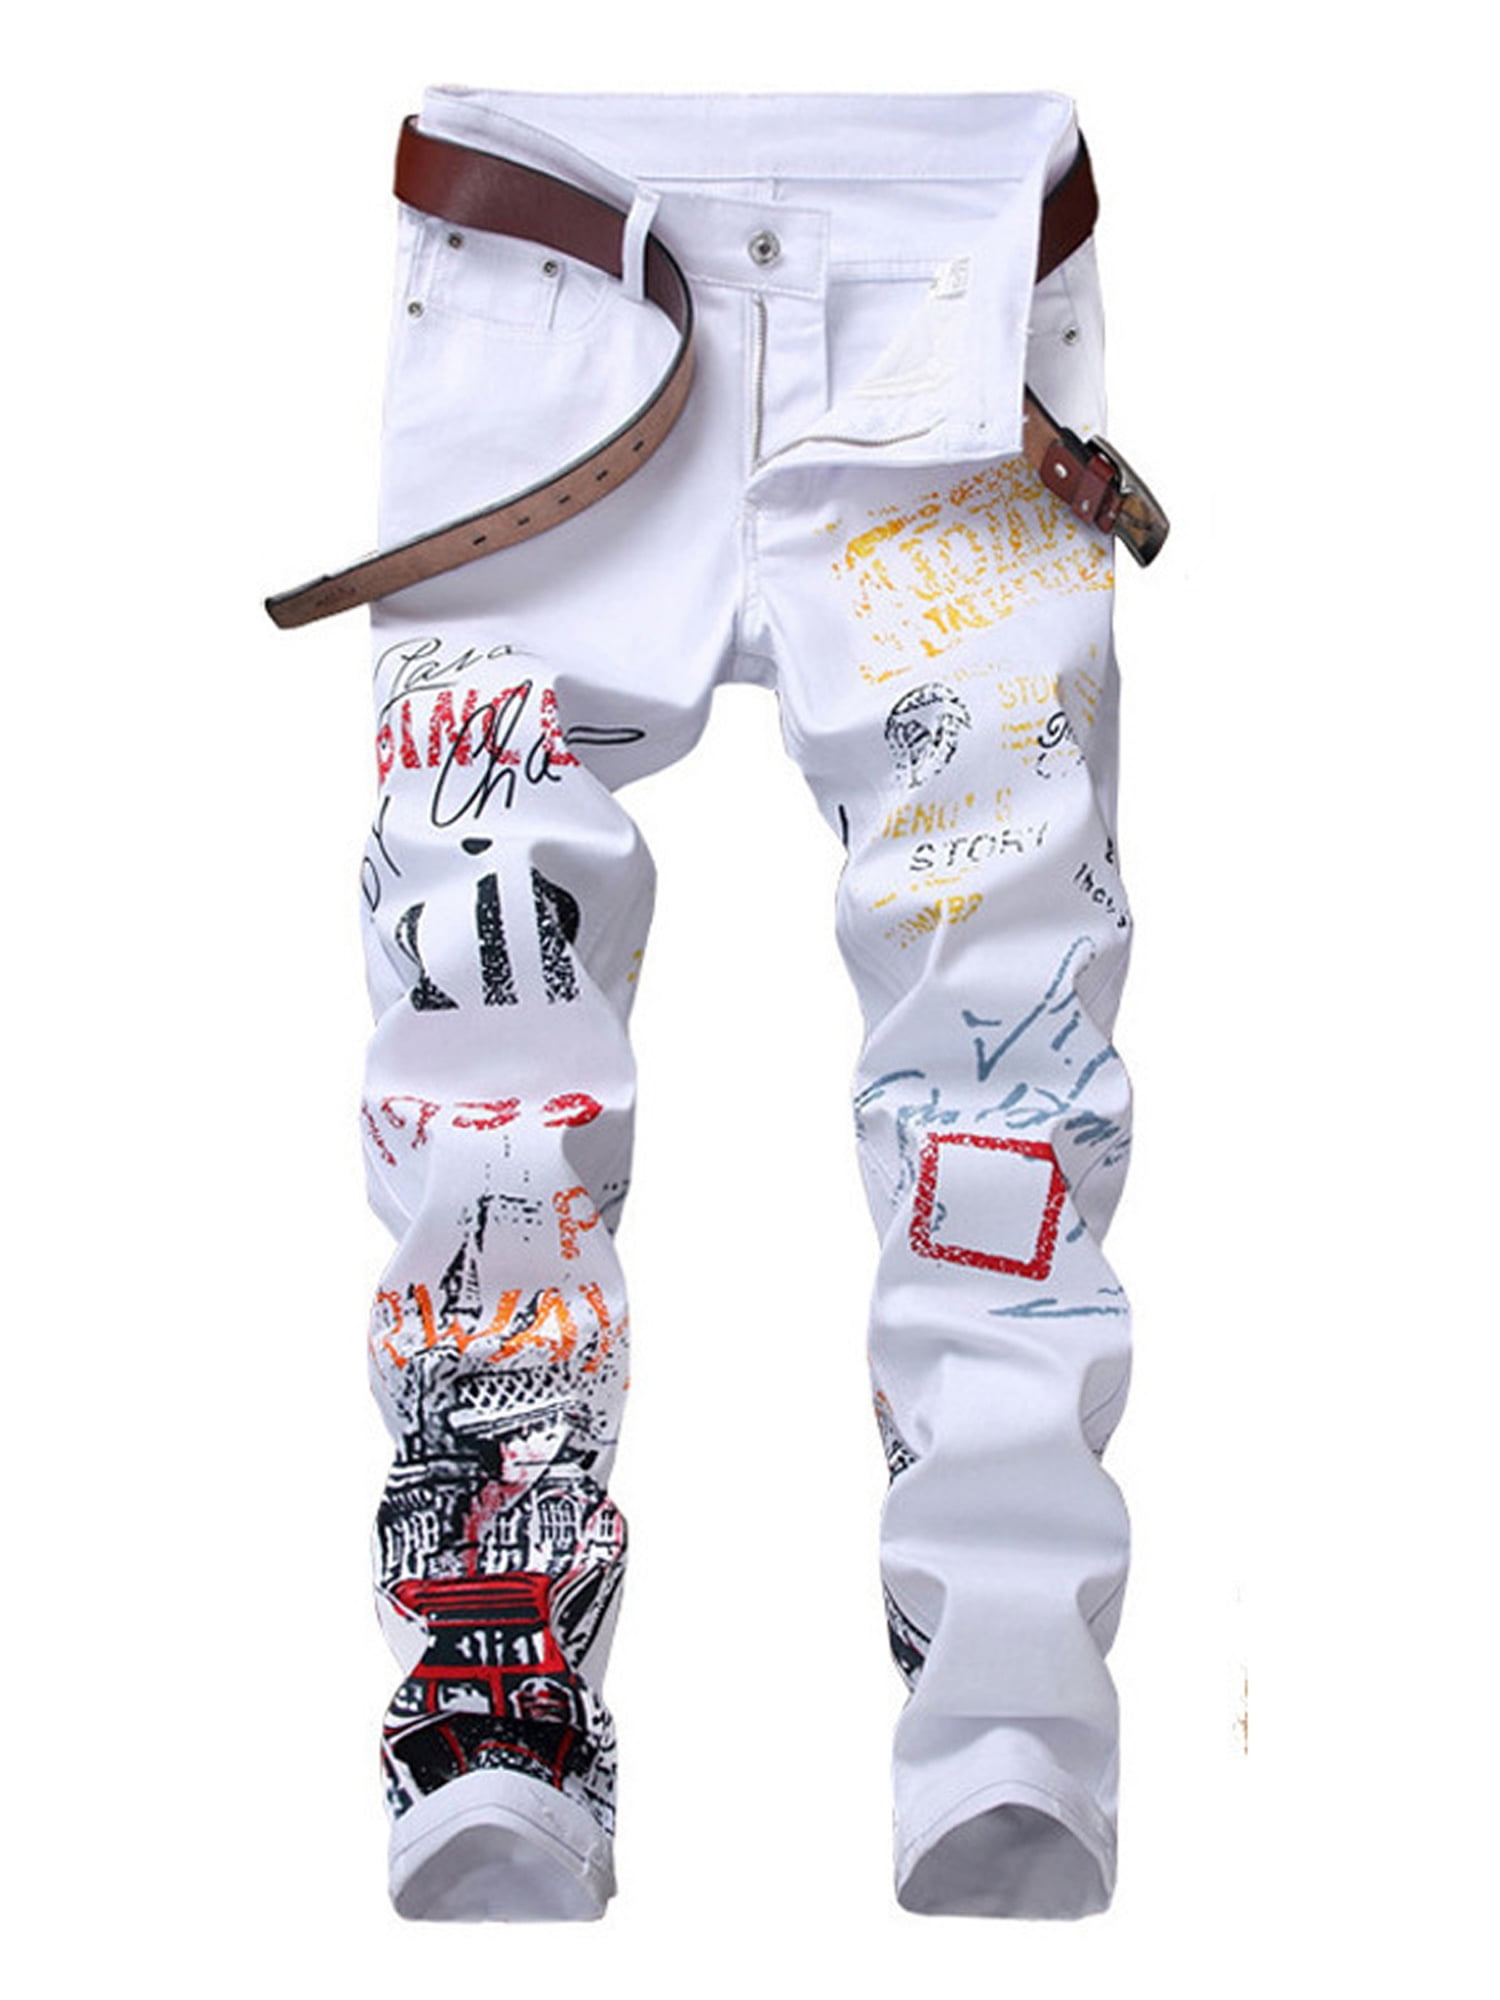 LSFYSZD Men Skinny Jeans Trendy Print Middle Waist Slim Fit Pencil Pants with Pockets for Boys White Black 094cfb74 8038 4518 a411 92ec61345218.5d7fd62e24eb215335d377bfeba7ece7